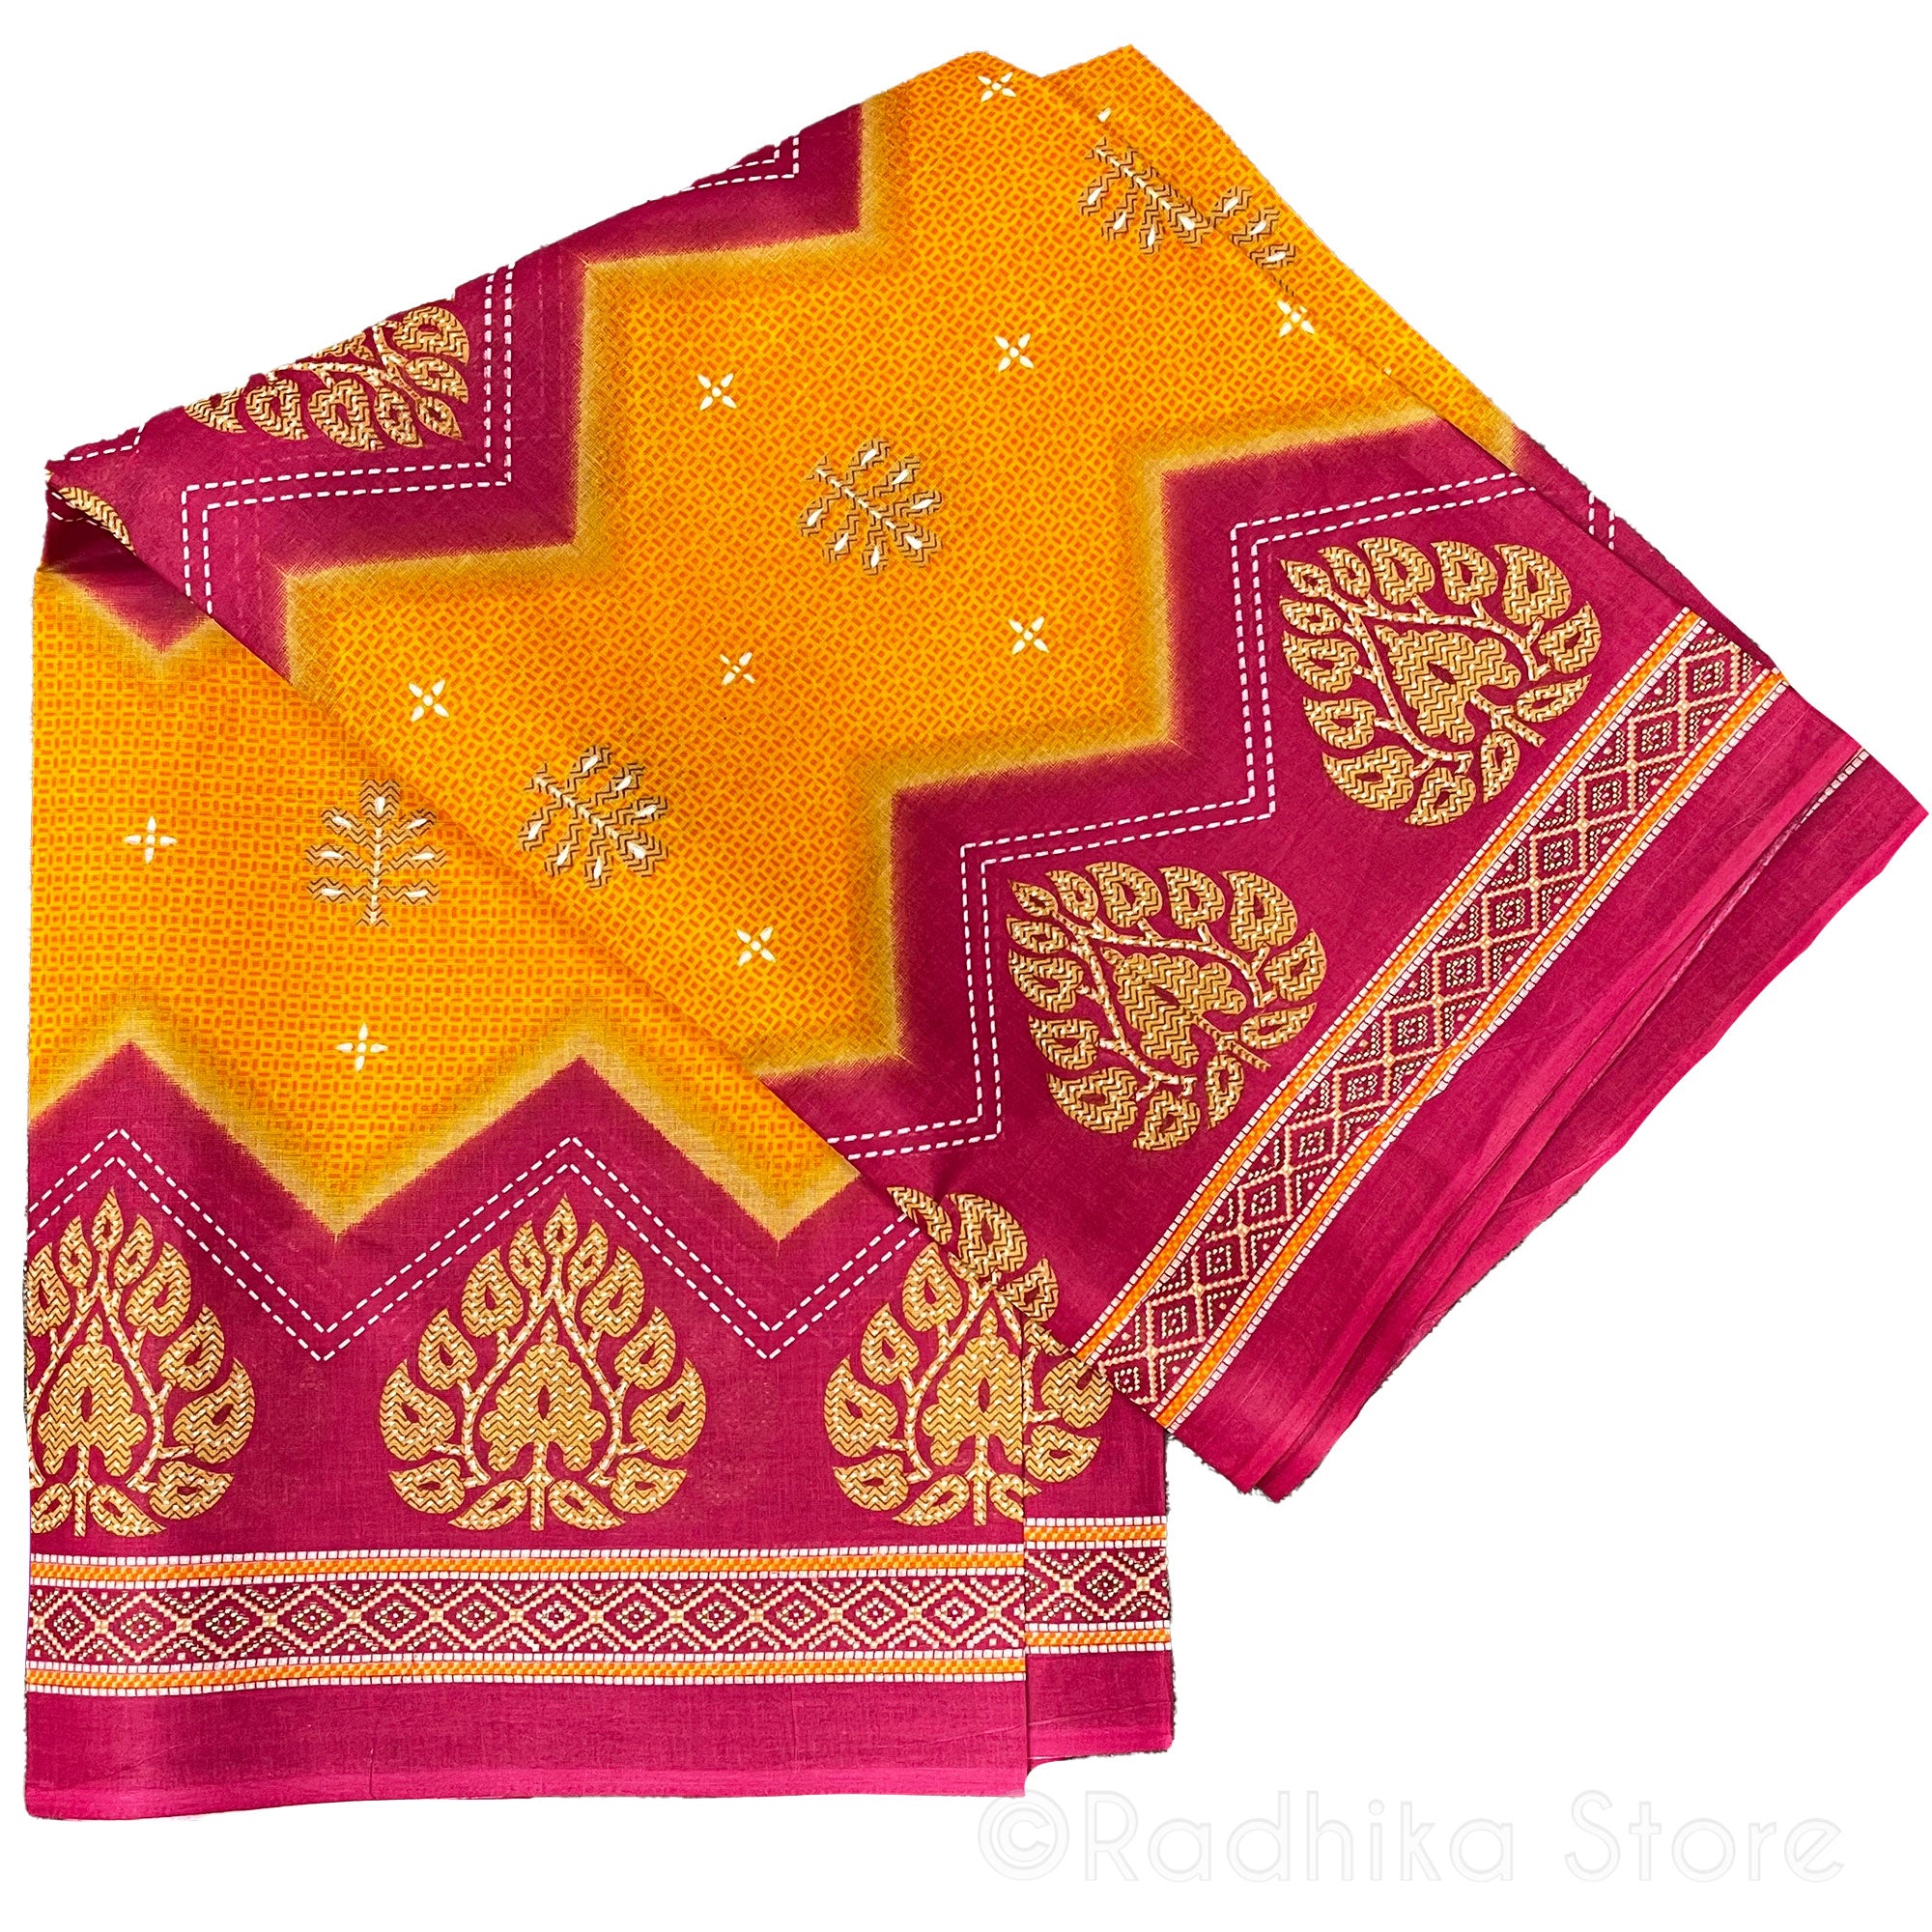 Vedic Designs - Bright Pink and Marigold- Cotton Saree